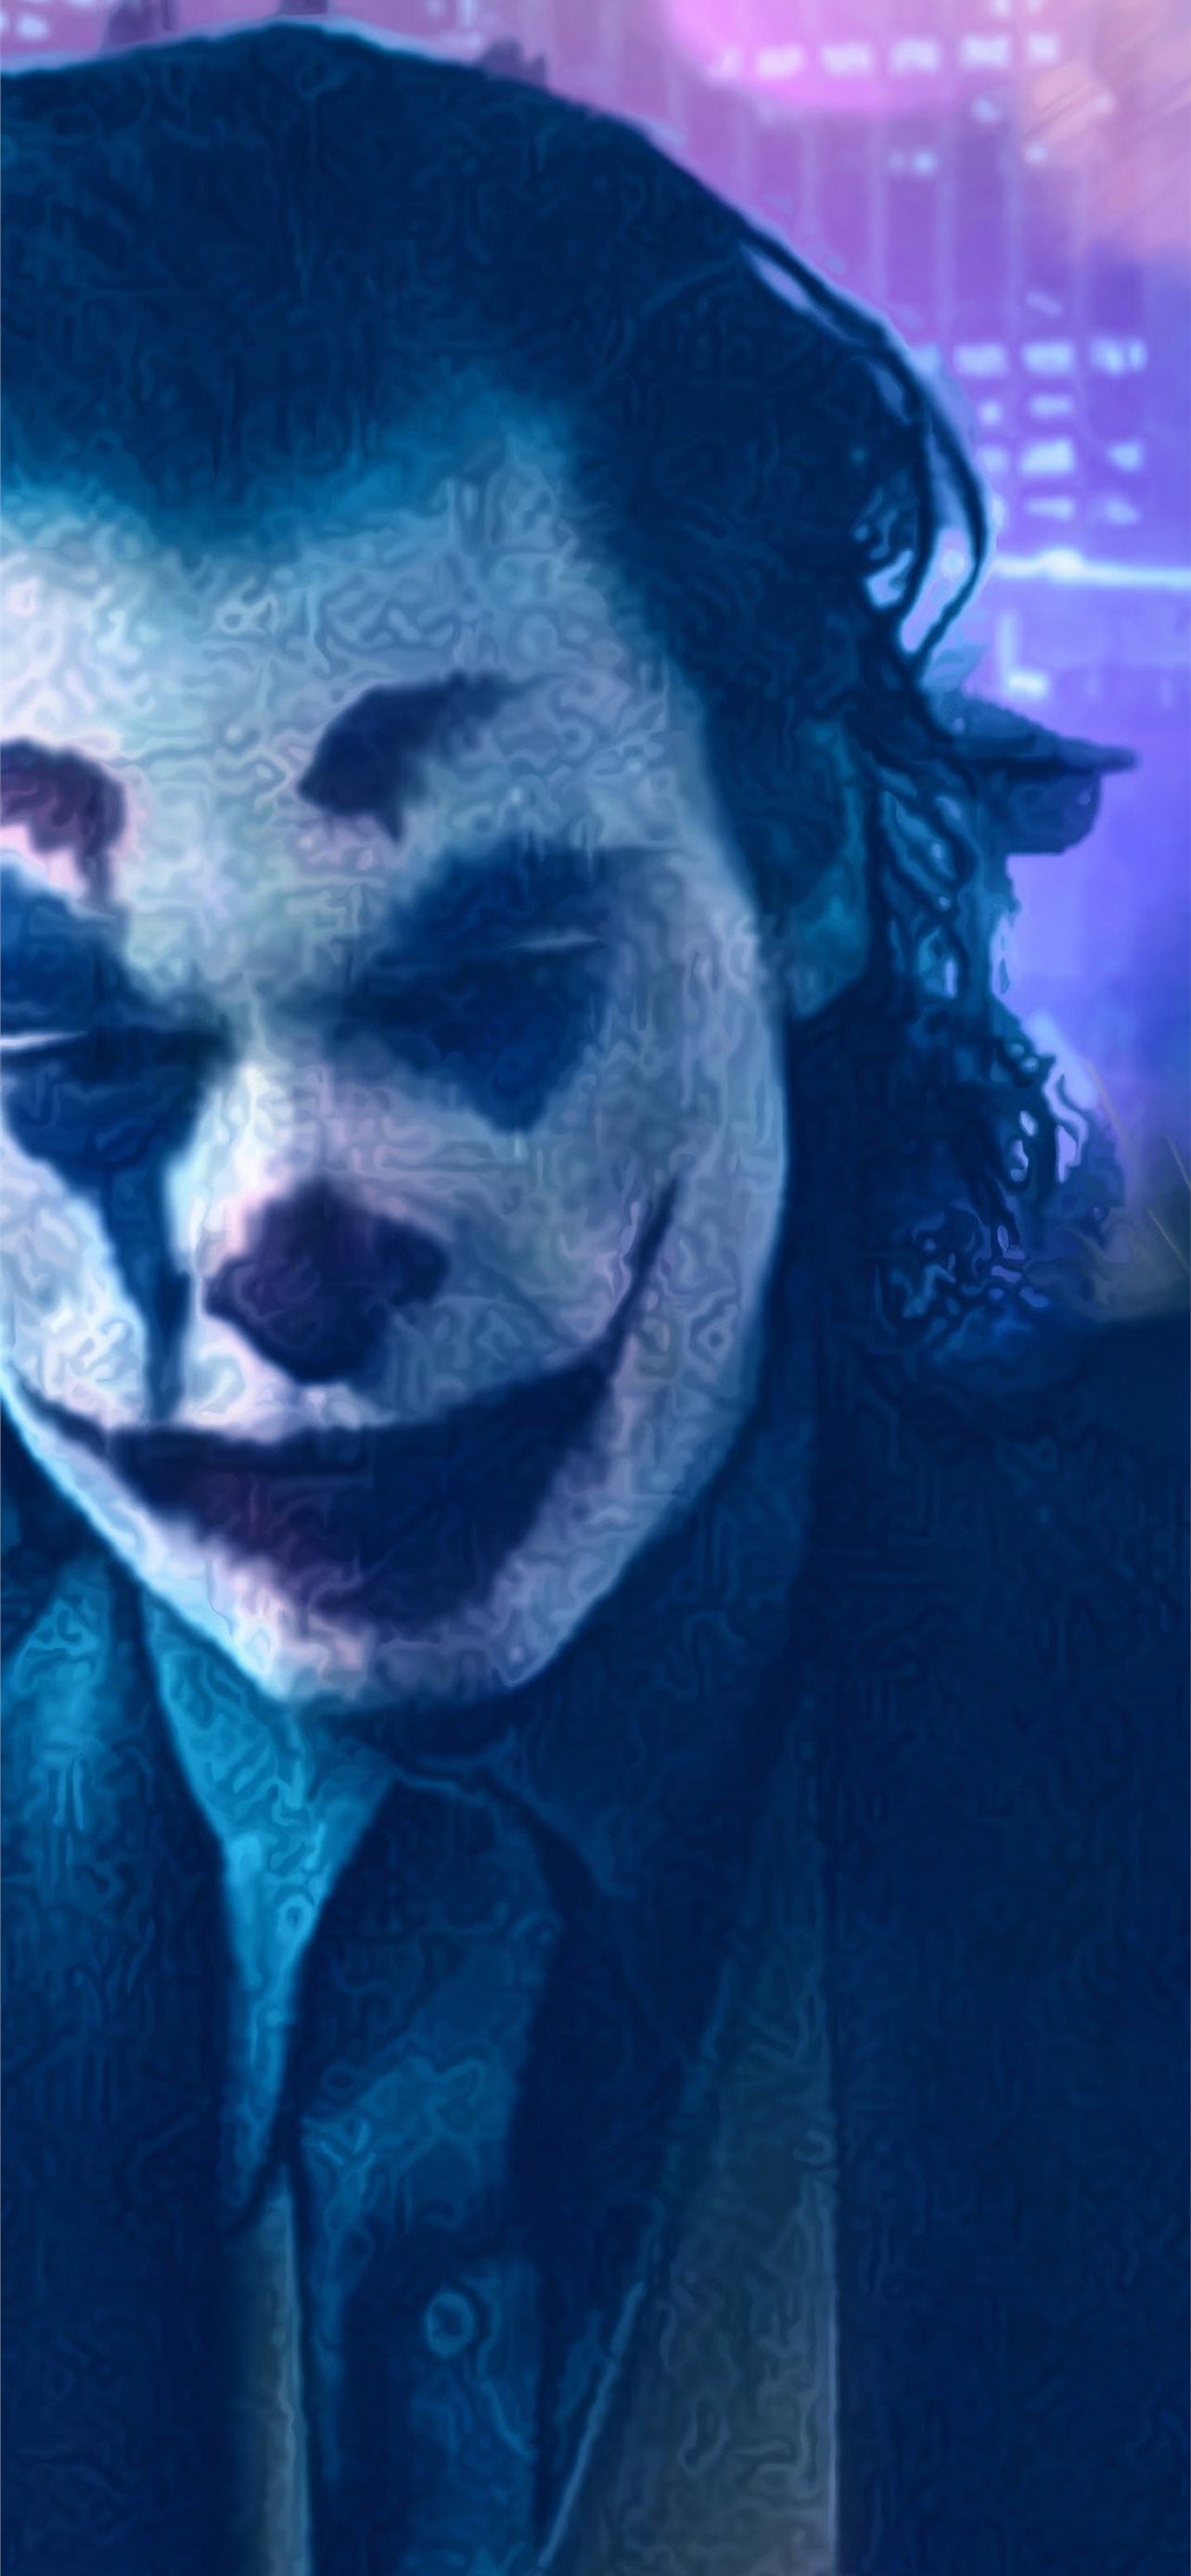 Joker 2019 Movie 8K Wallpapers